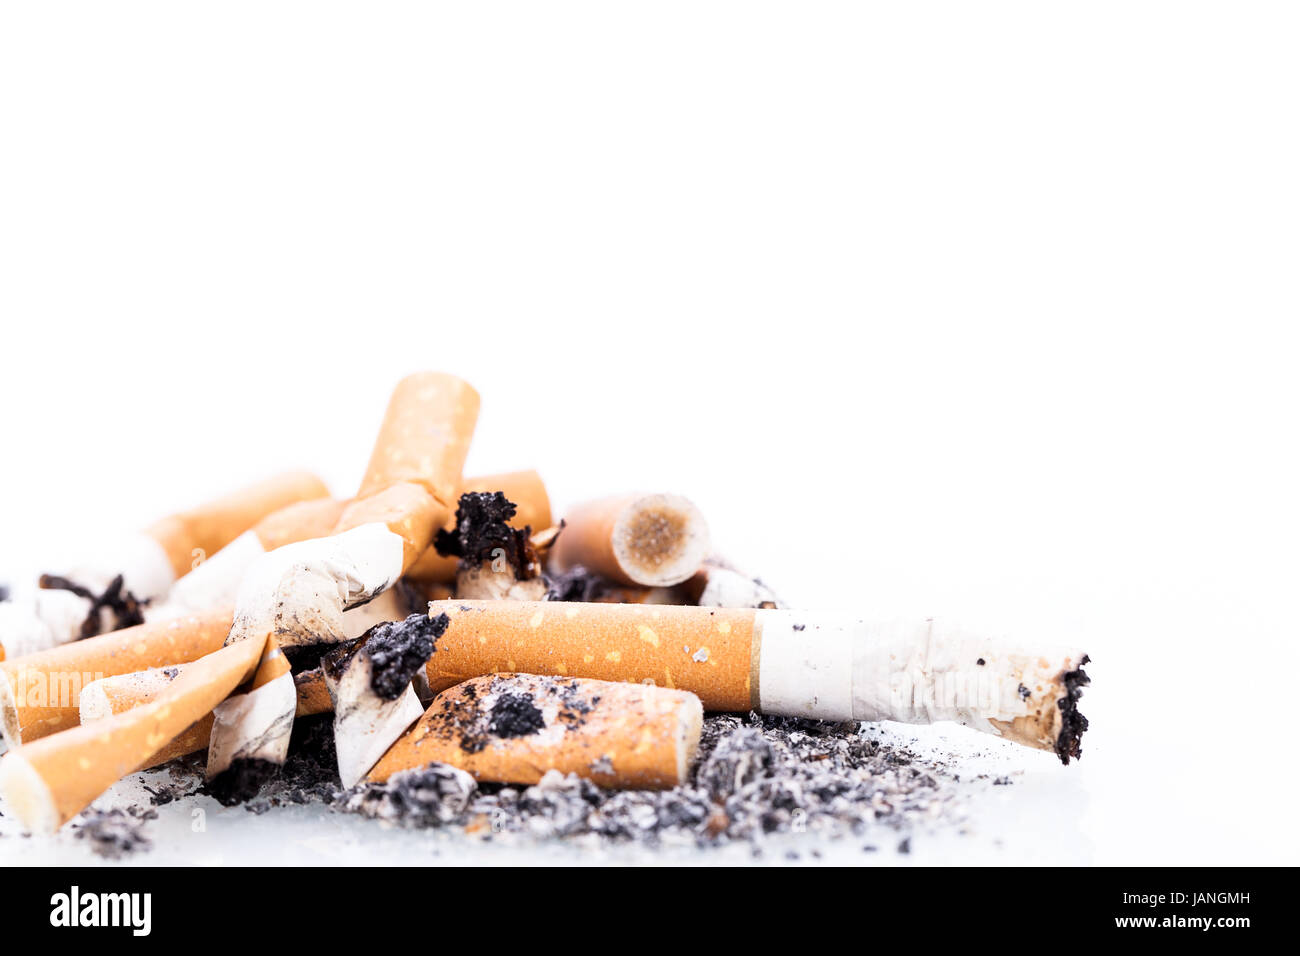 Aschenbecher mit zigaretten détail aufnahme gesundheit asche isoliert cadeaux Banque D'Images